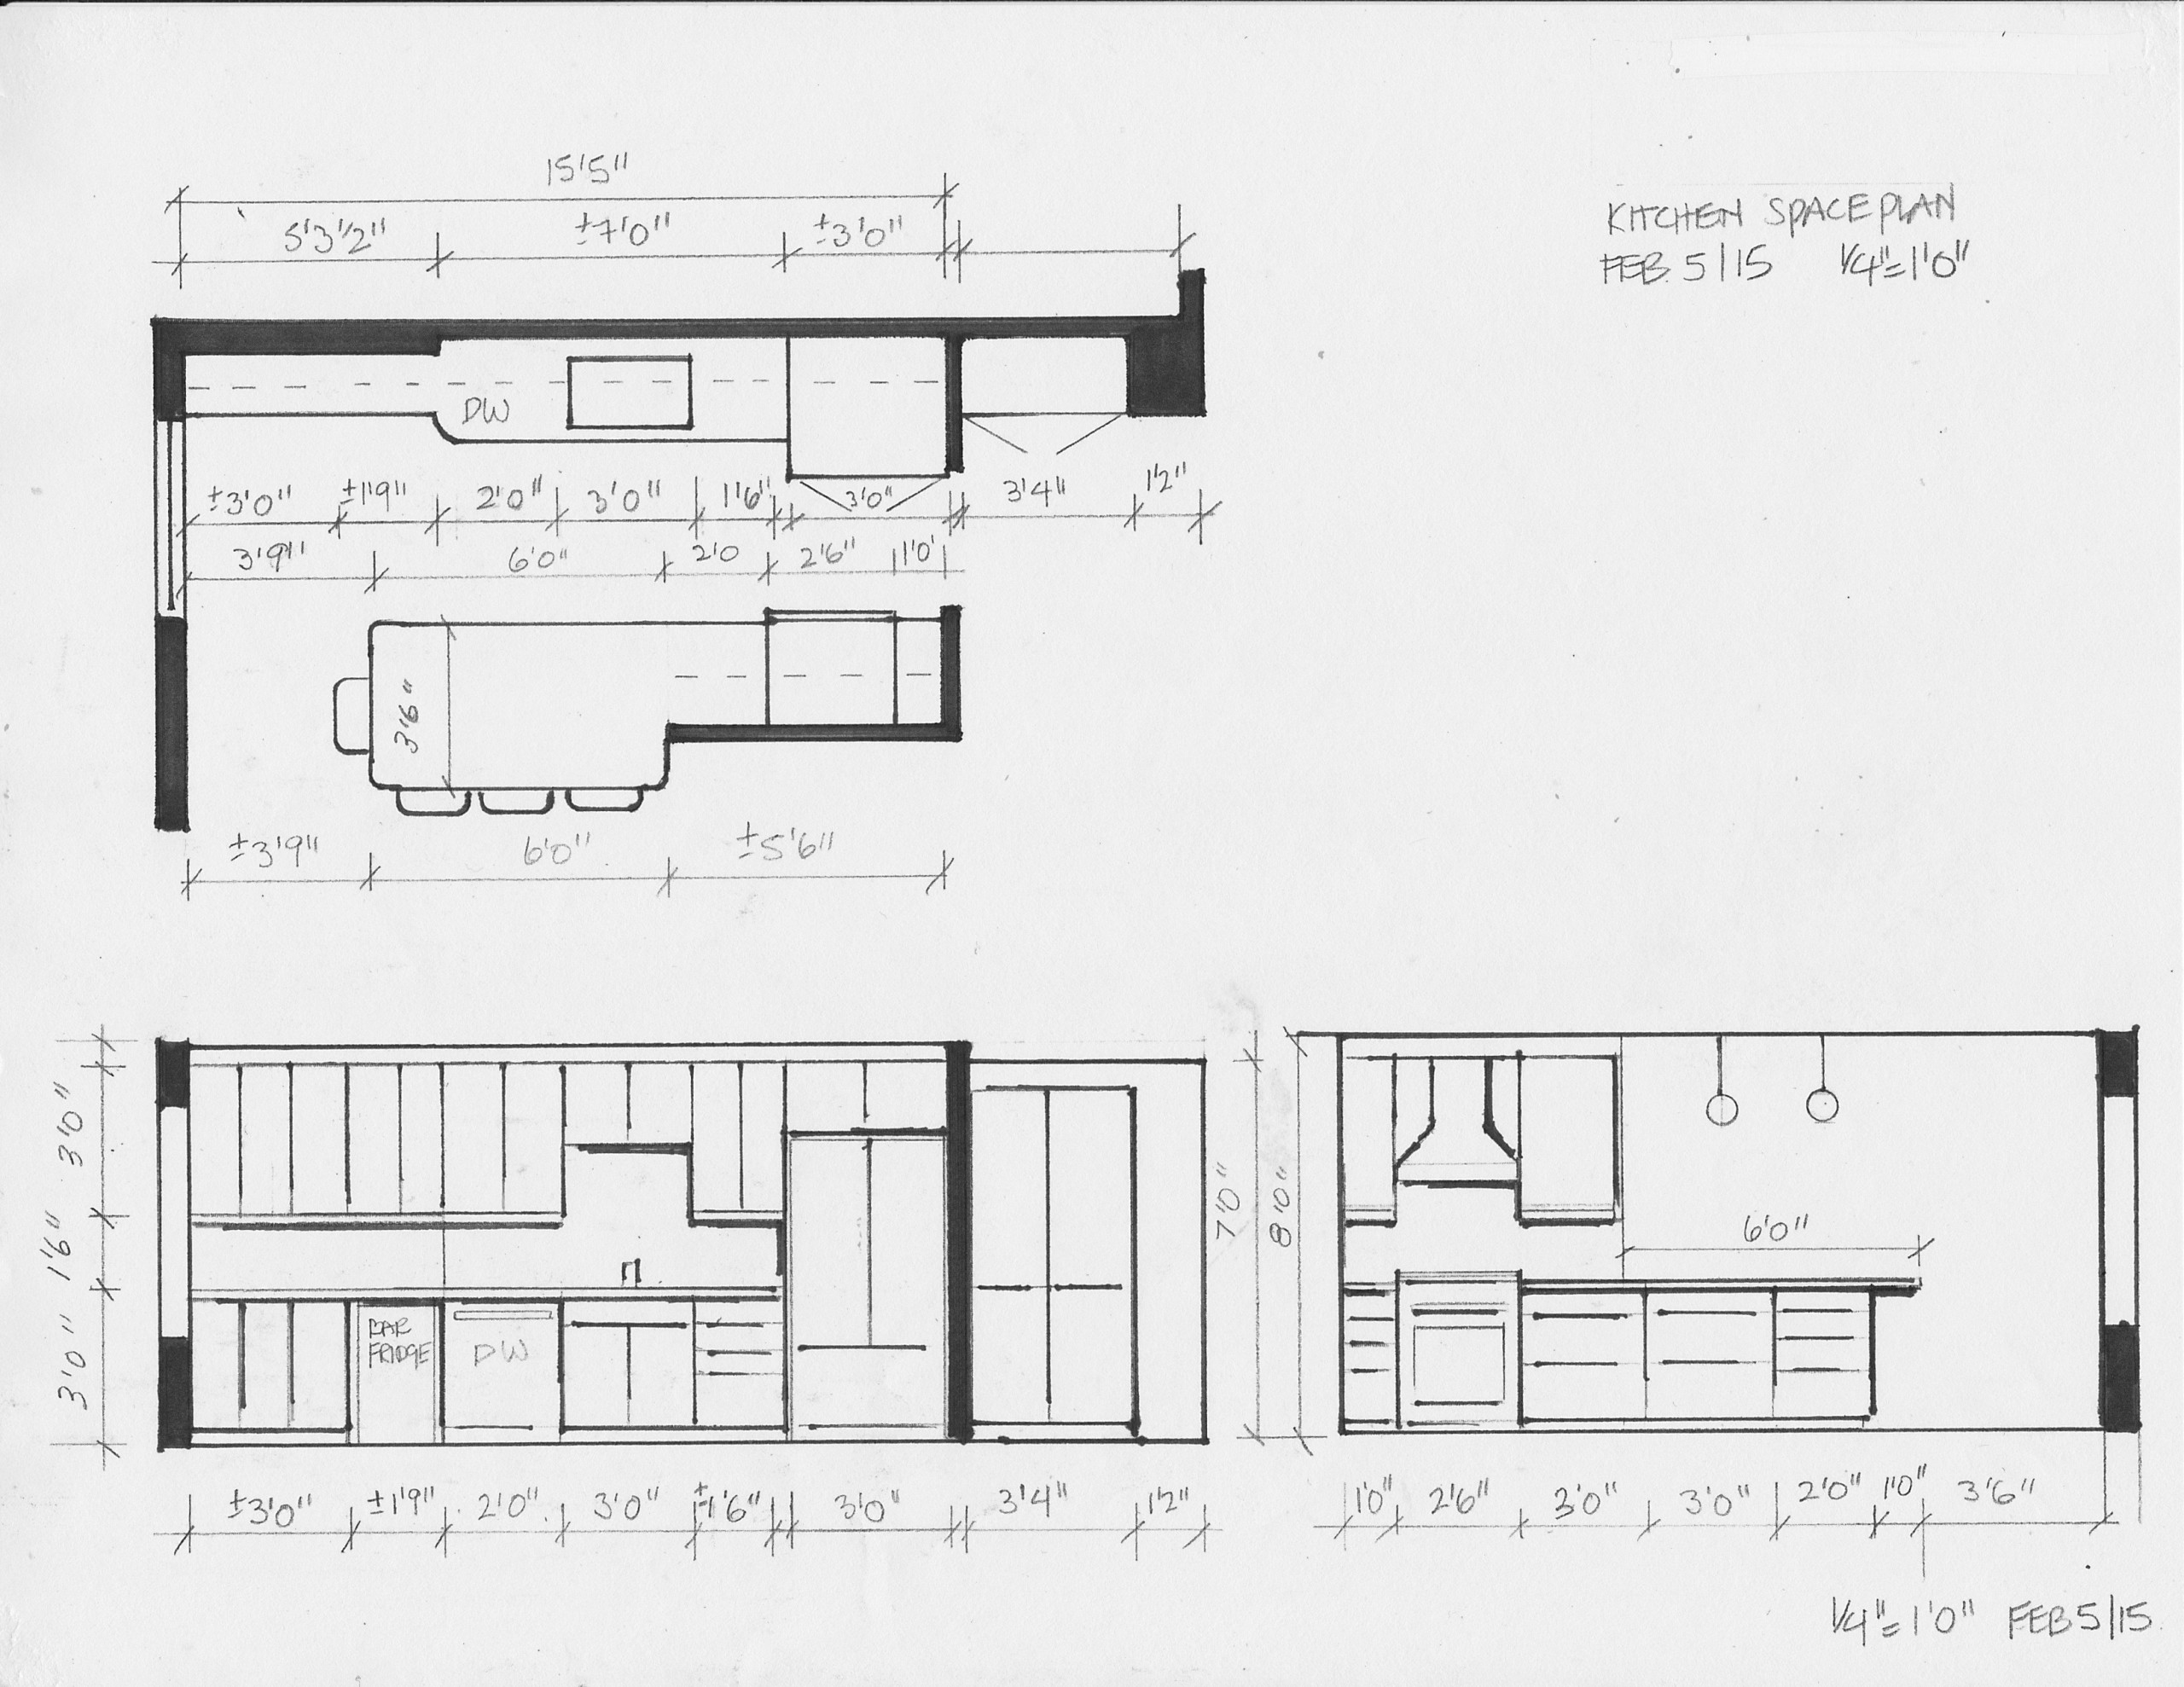 residential space plans- waterfront condominium kitchen